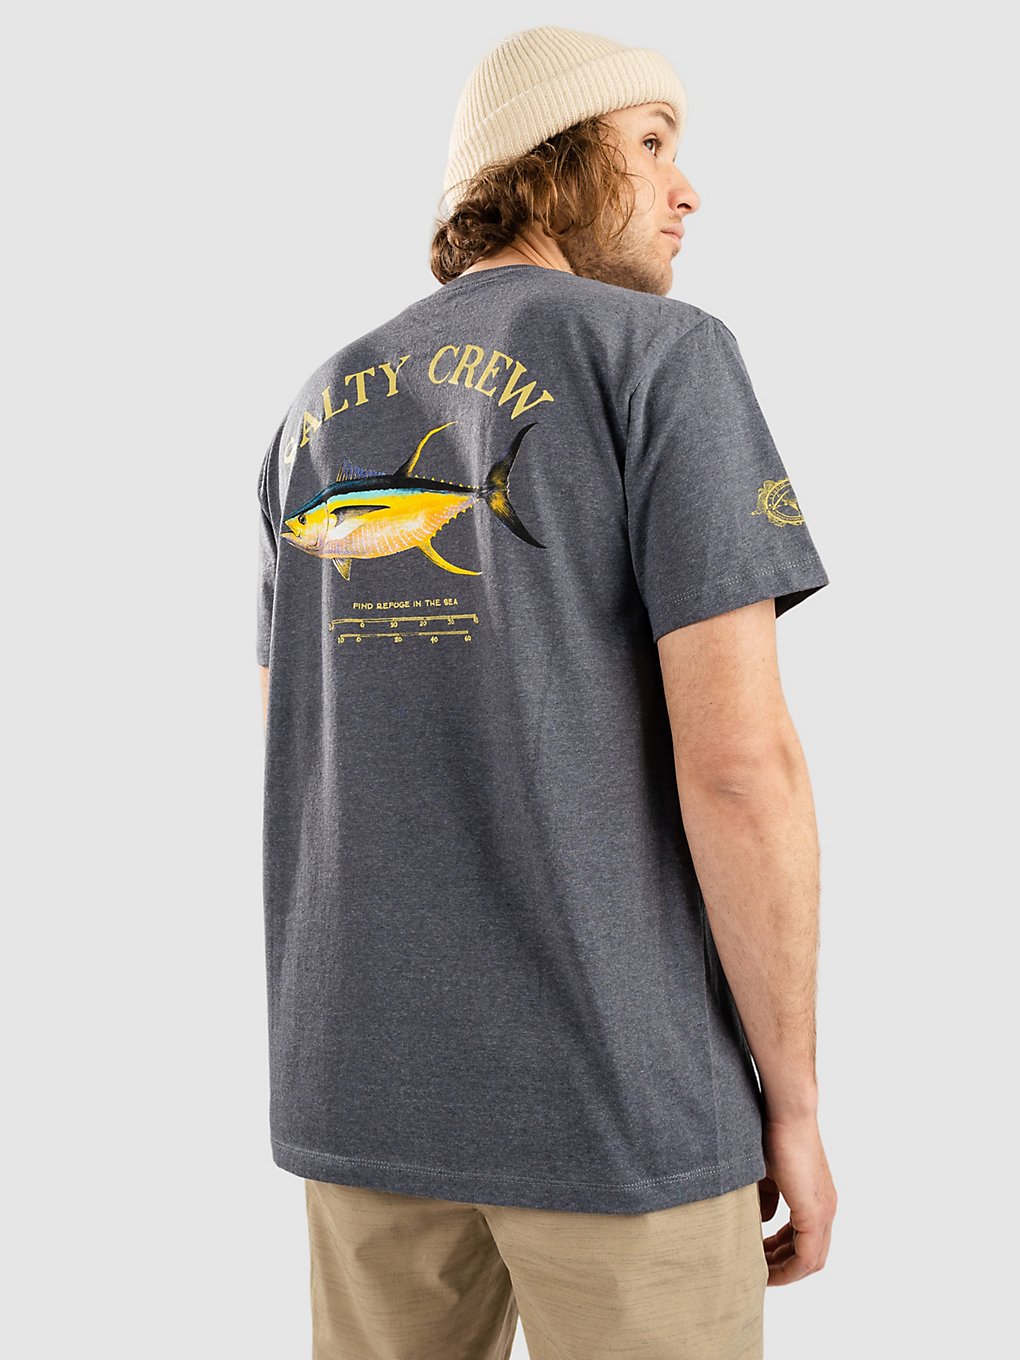 Salty Crew Ahi Mount T-Shirt heather grey kaufen